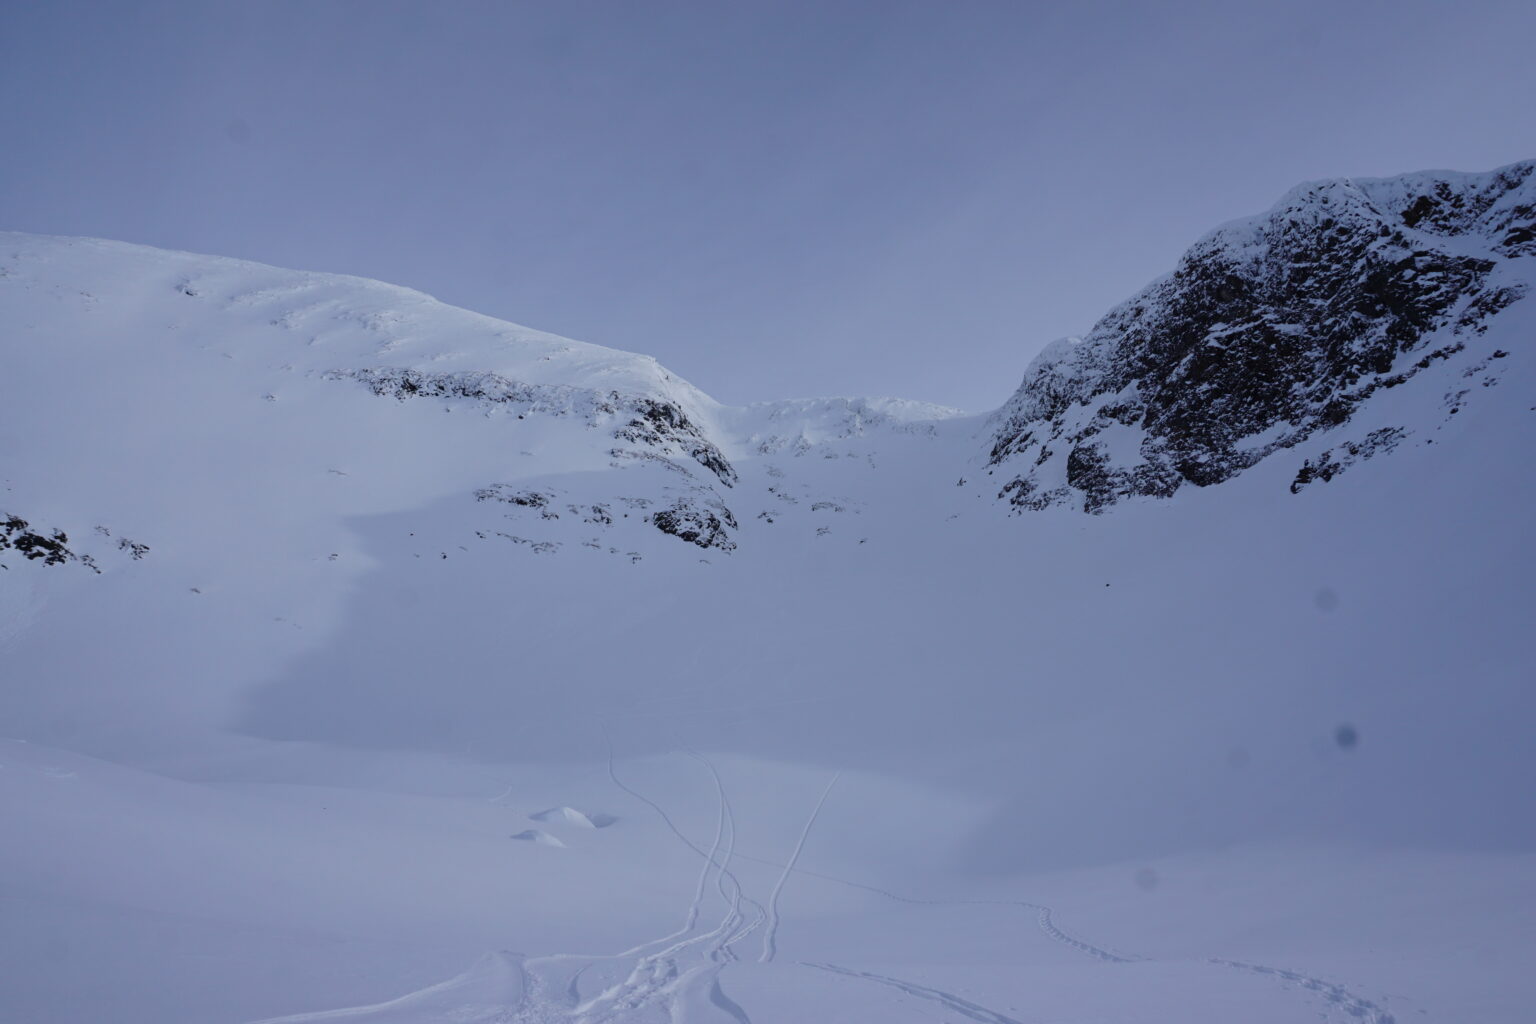 Looking back up the Tamokfjellet North chute